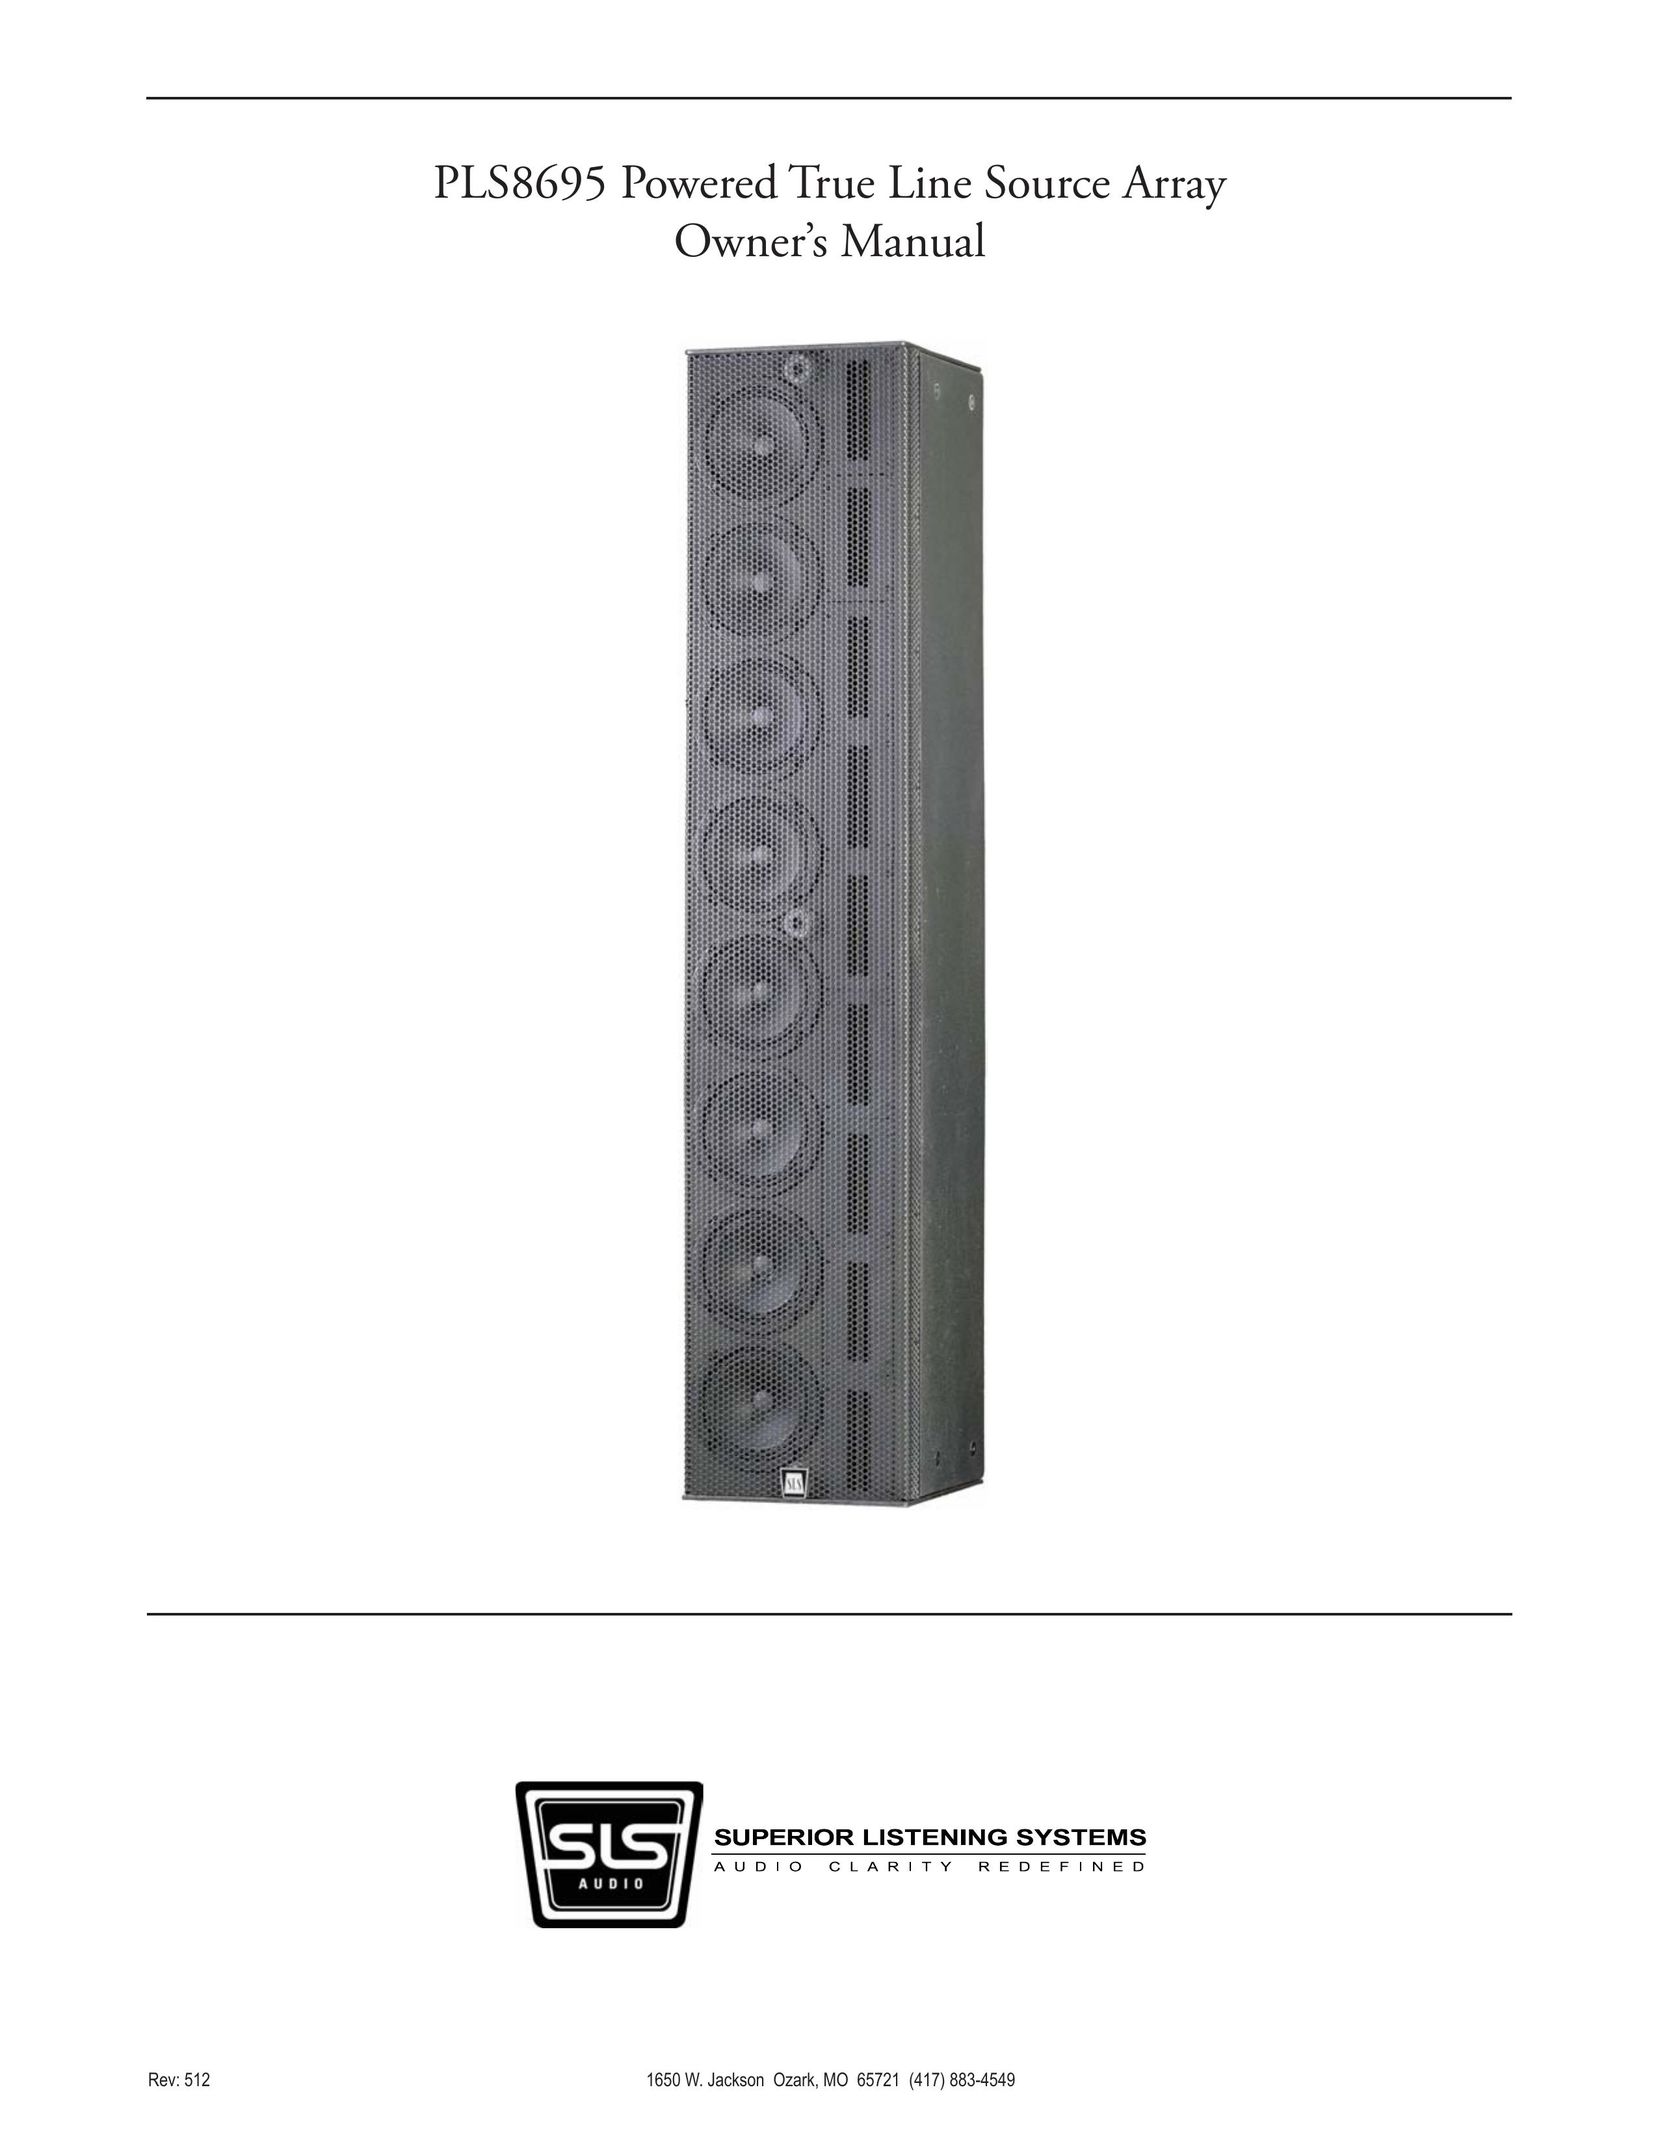 SLS Audio PLS8695 Speaker User Manual